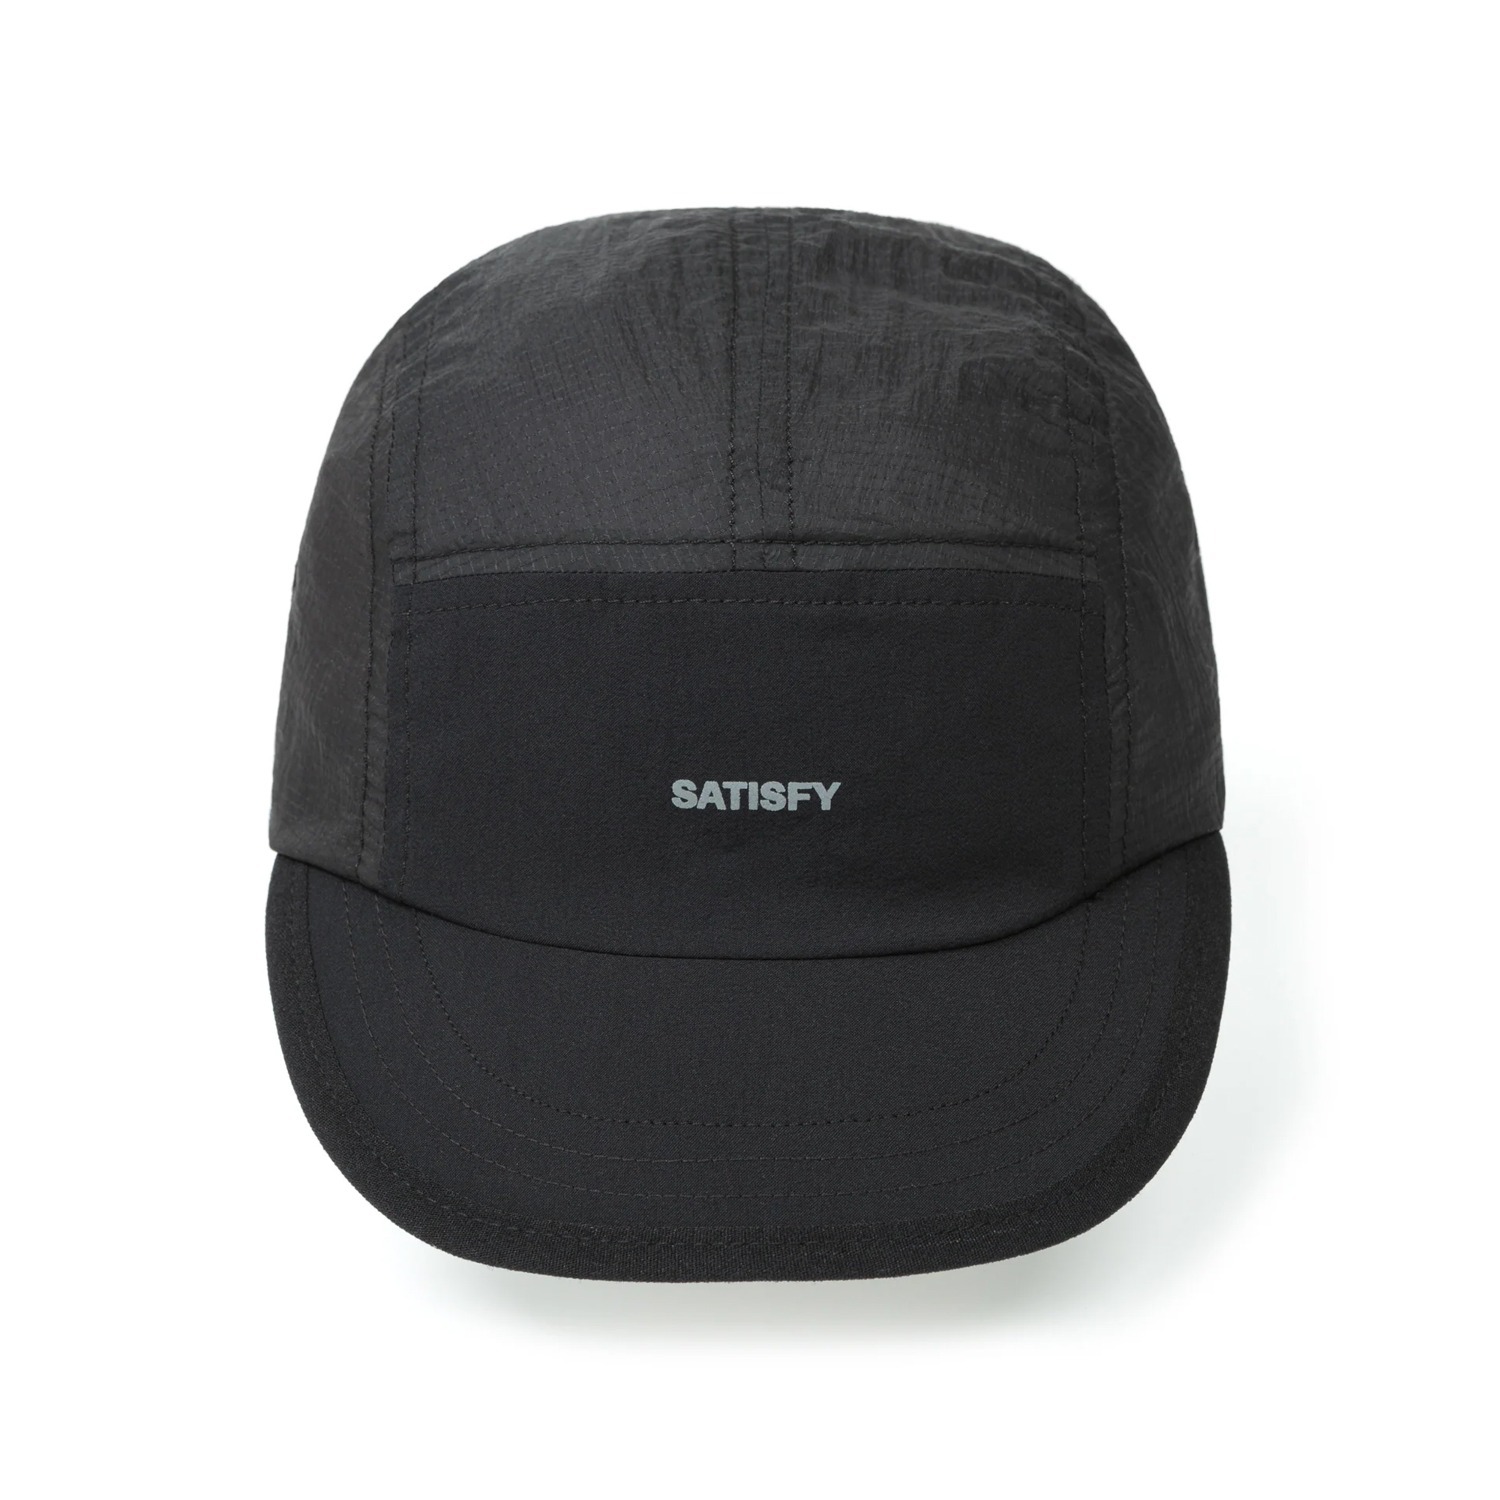 SATISFY RIPPY™ TRAIL CAP BLACK[새티스파이 리피™ 트레일 캡 블랙]